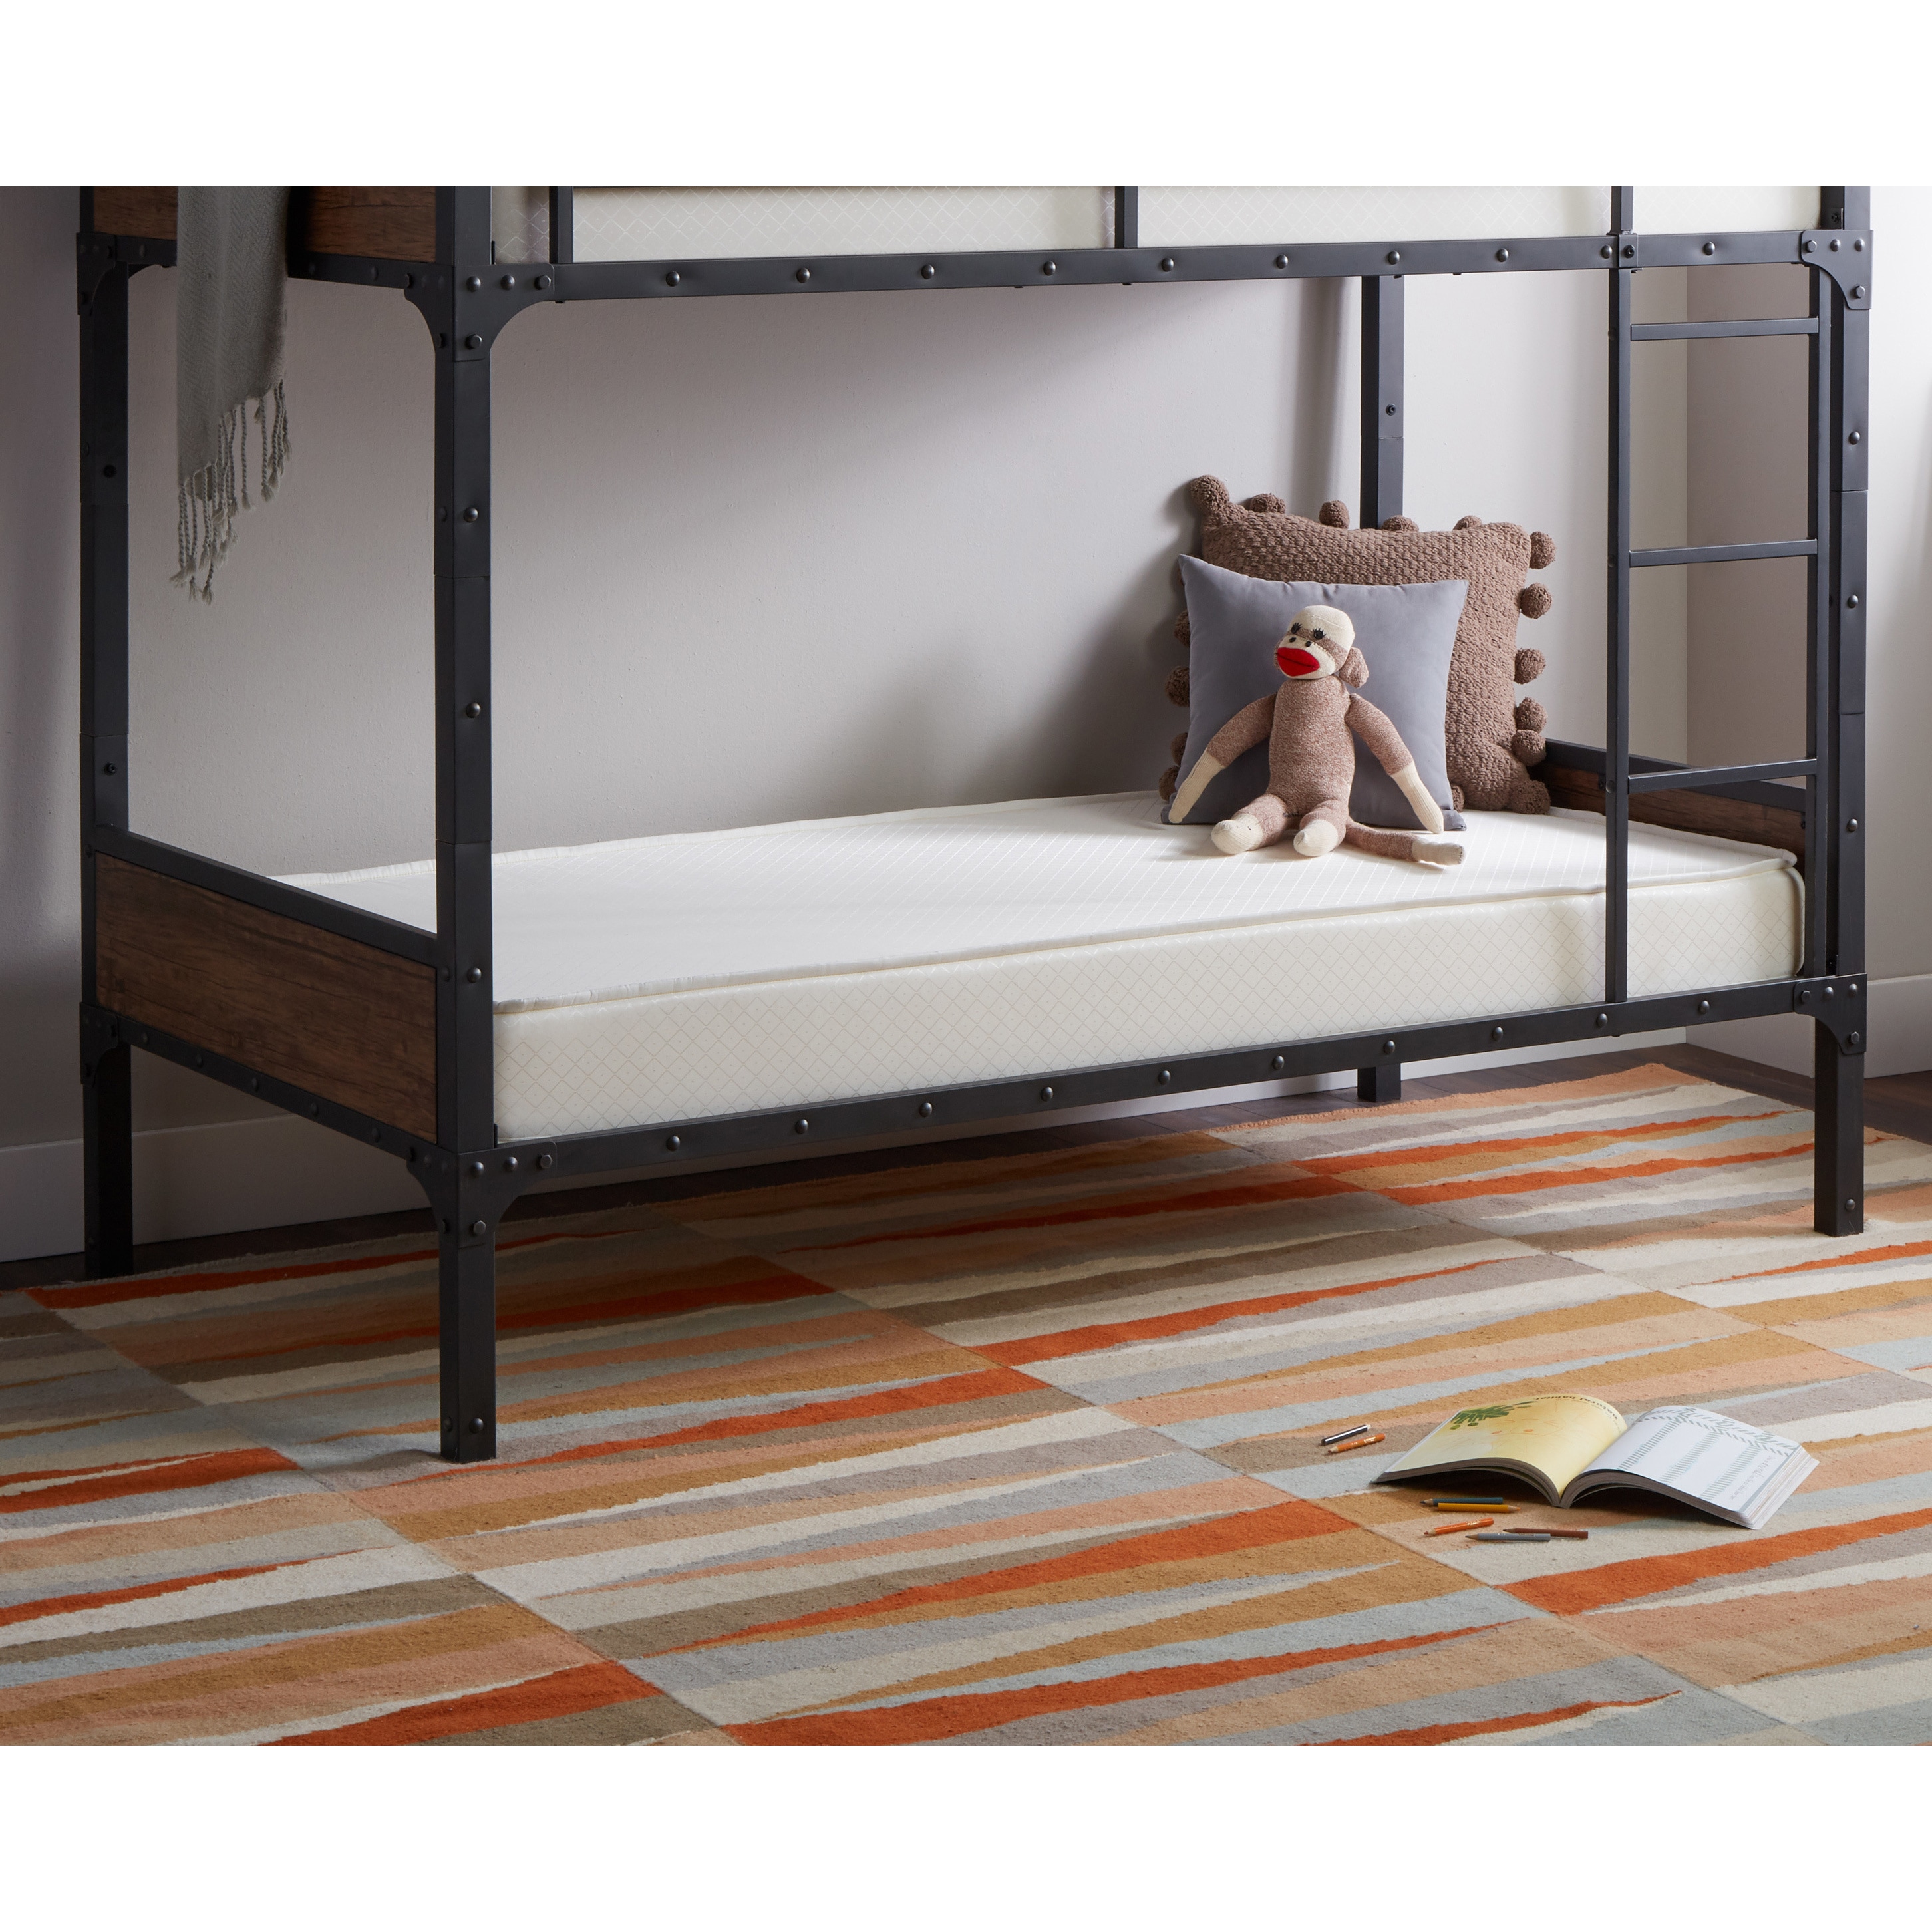 Select Luxury Reversible 6 inch White Bunk Bed Twin size Foam Mattress